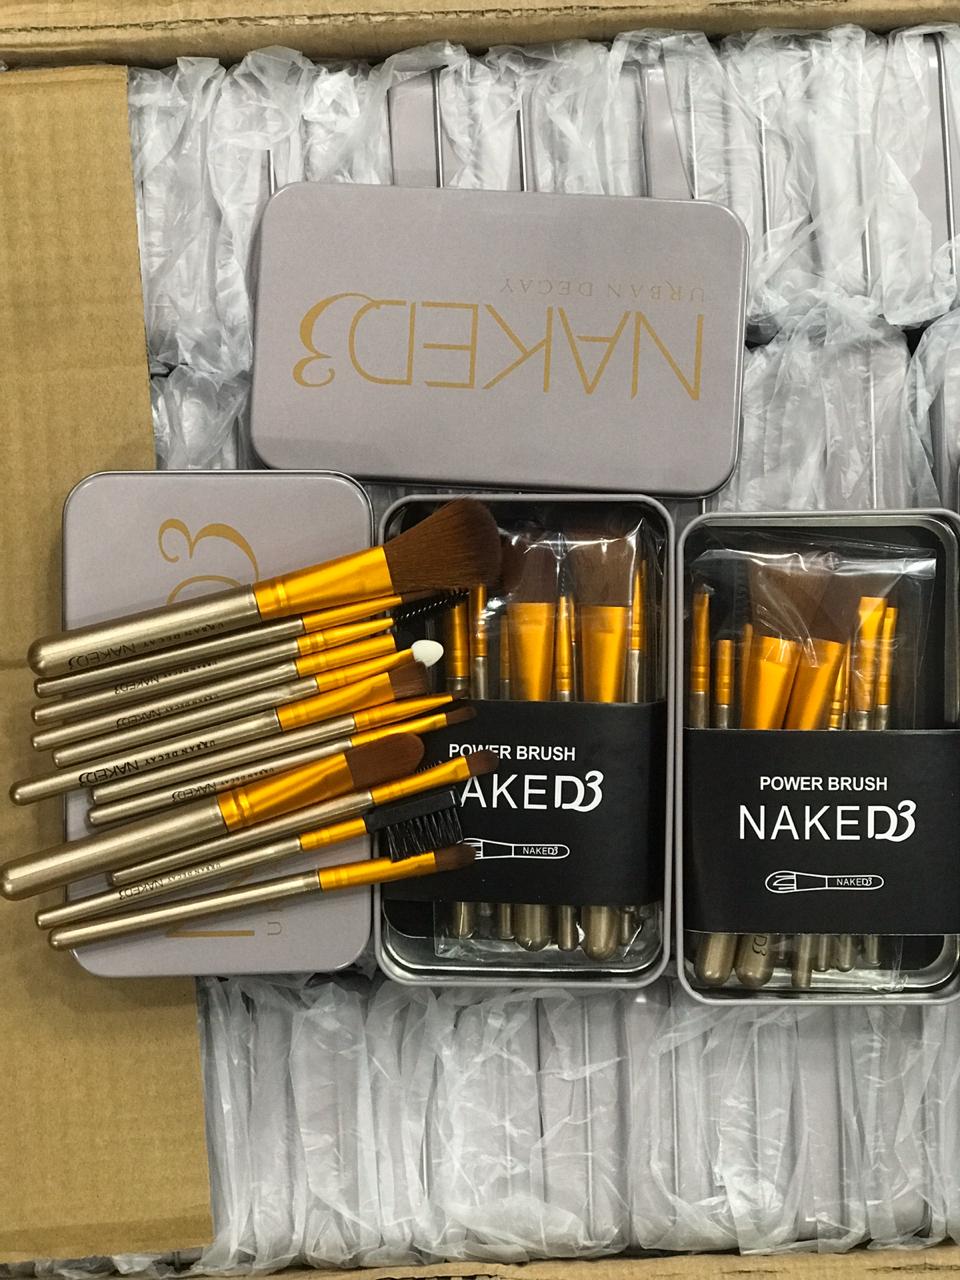 Naked3 Power Brushes